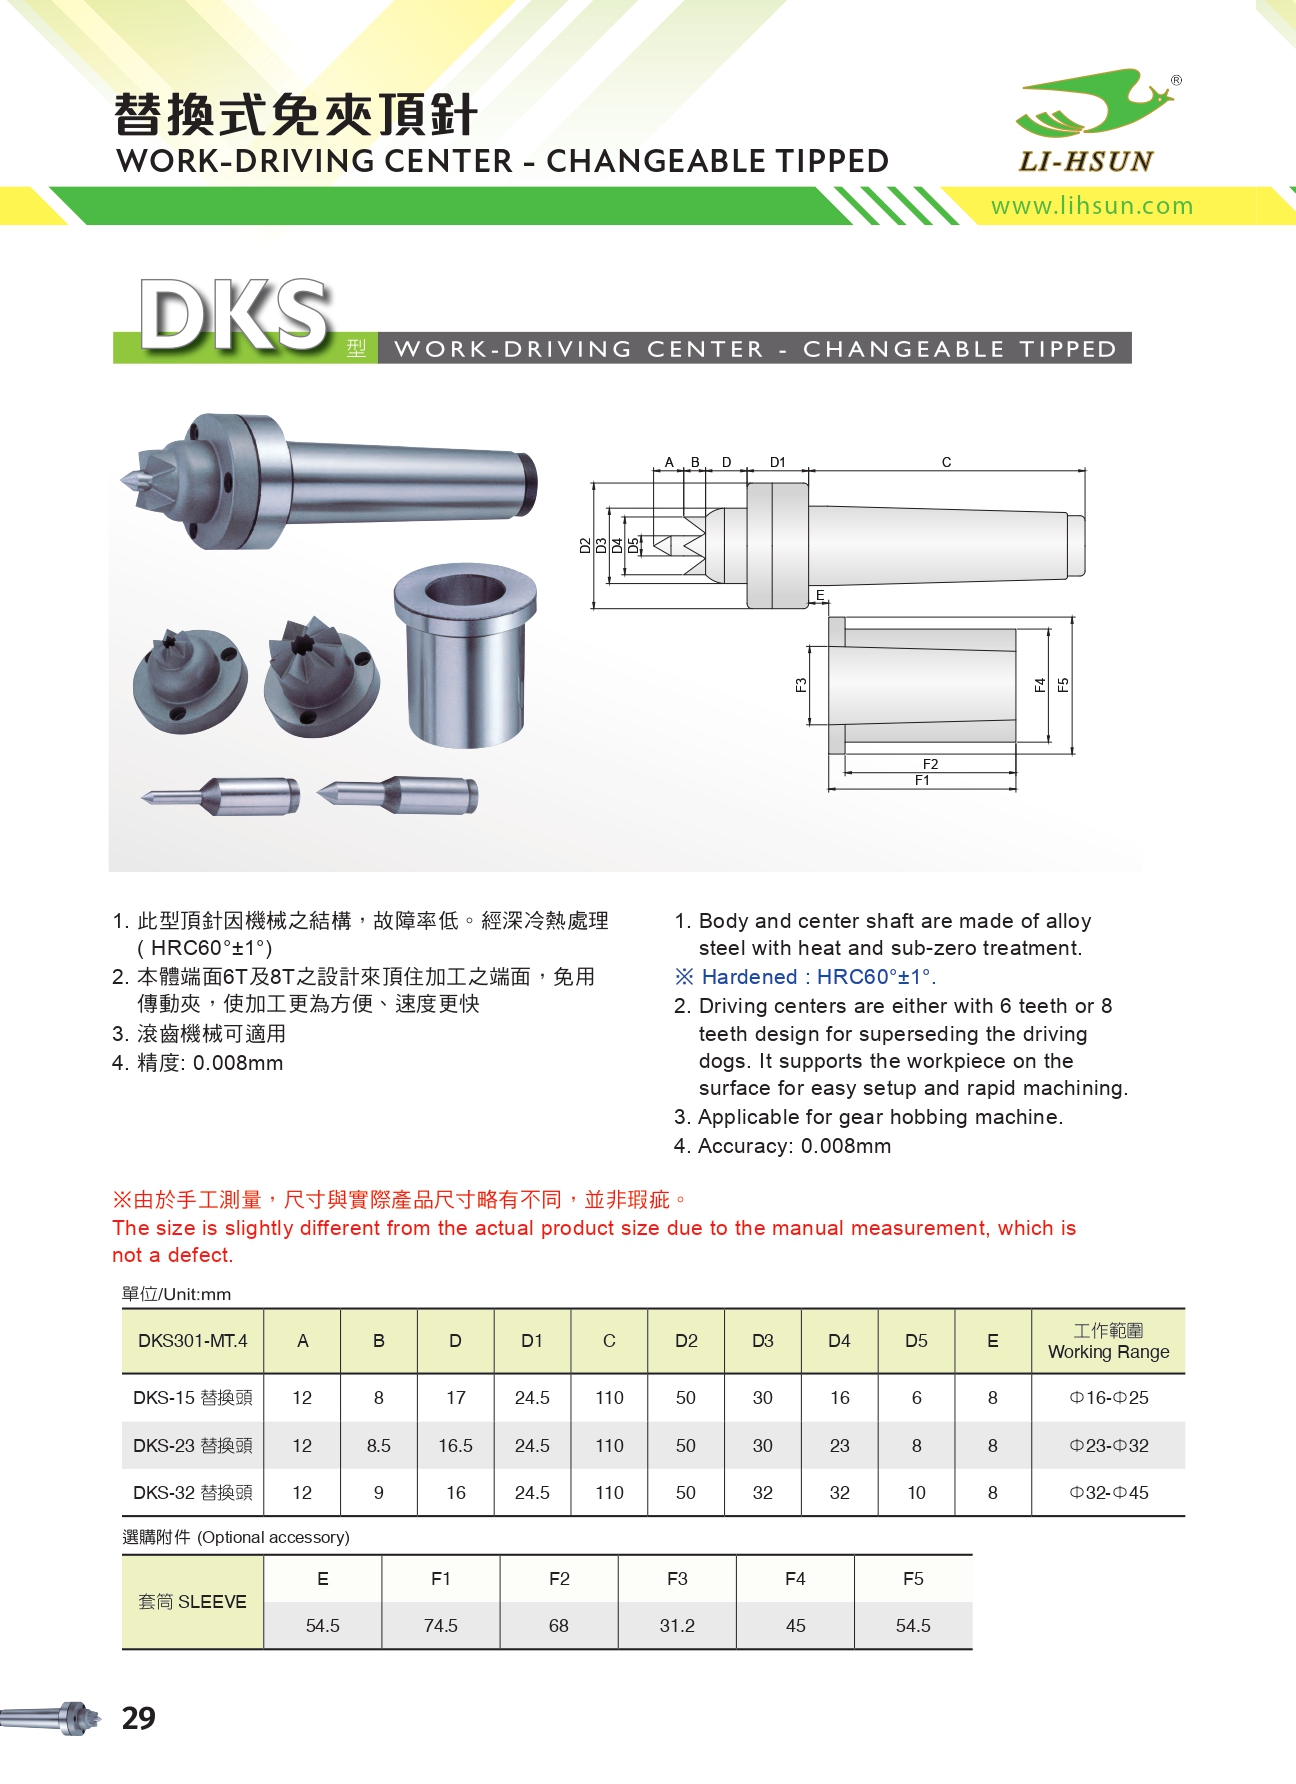 Catalog|DKS